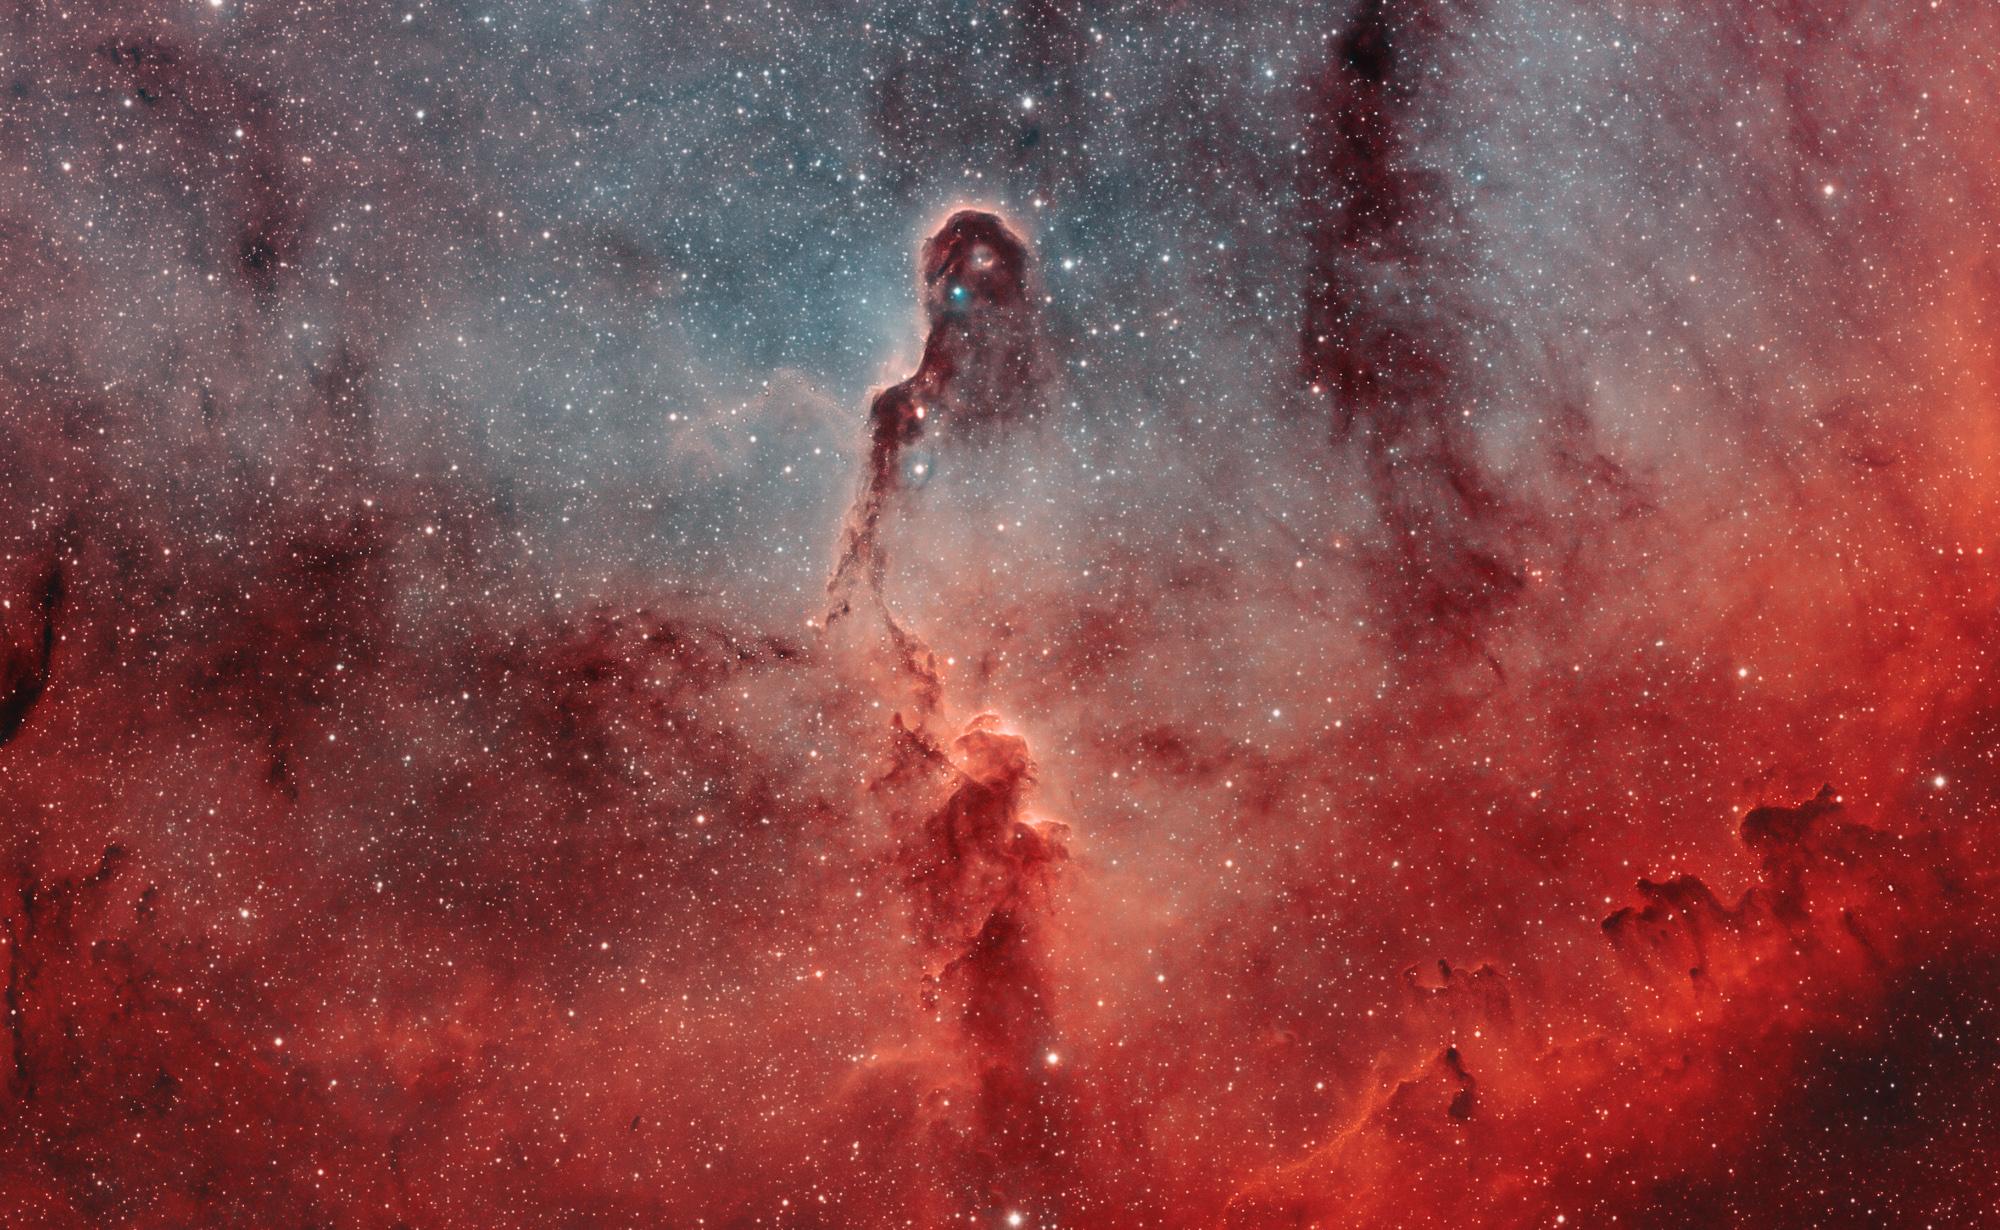 1500 Pillars Of Creation Stock Photos Pictures  RoyaltyFree Images   iStock  Nebula Galaxy Eagle nebula